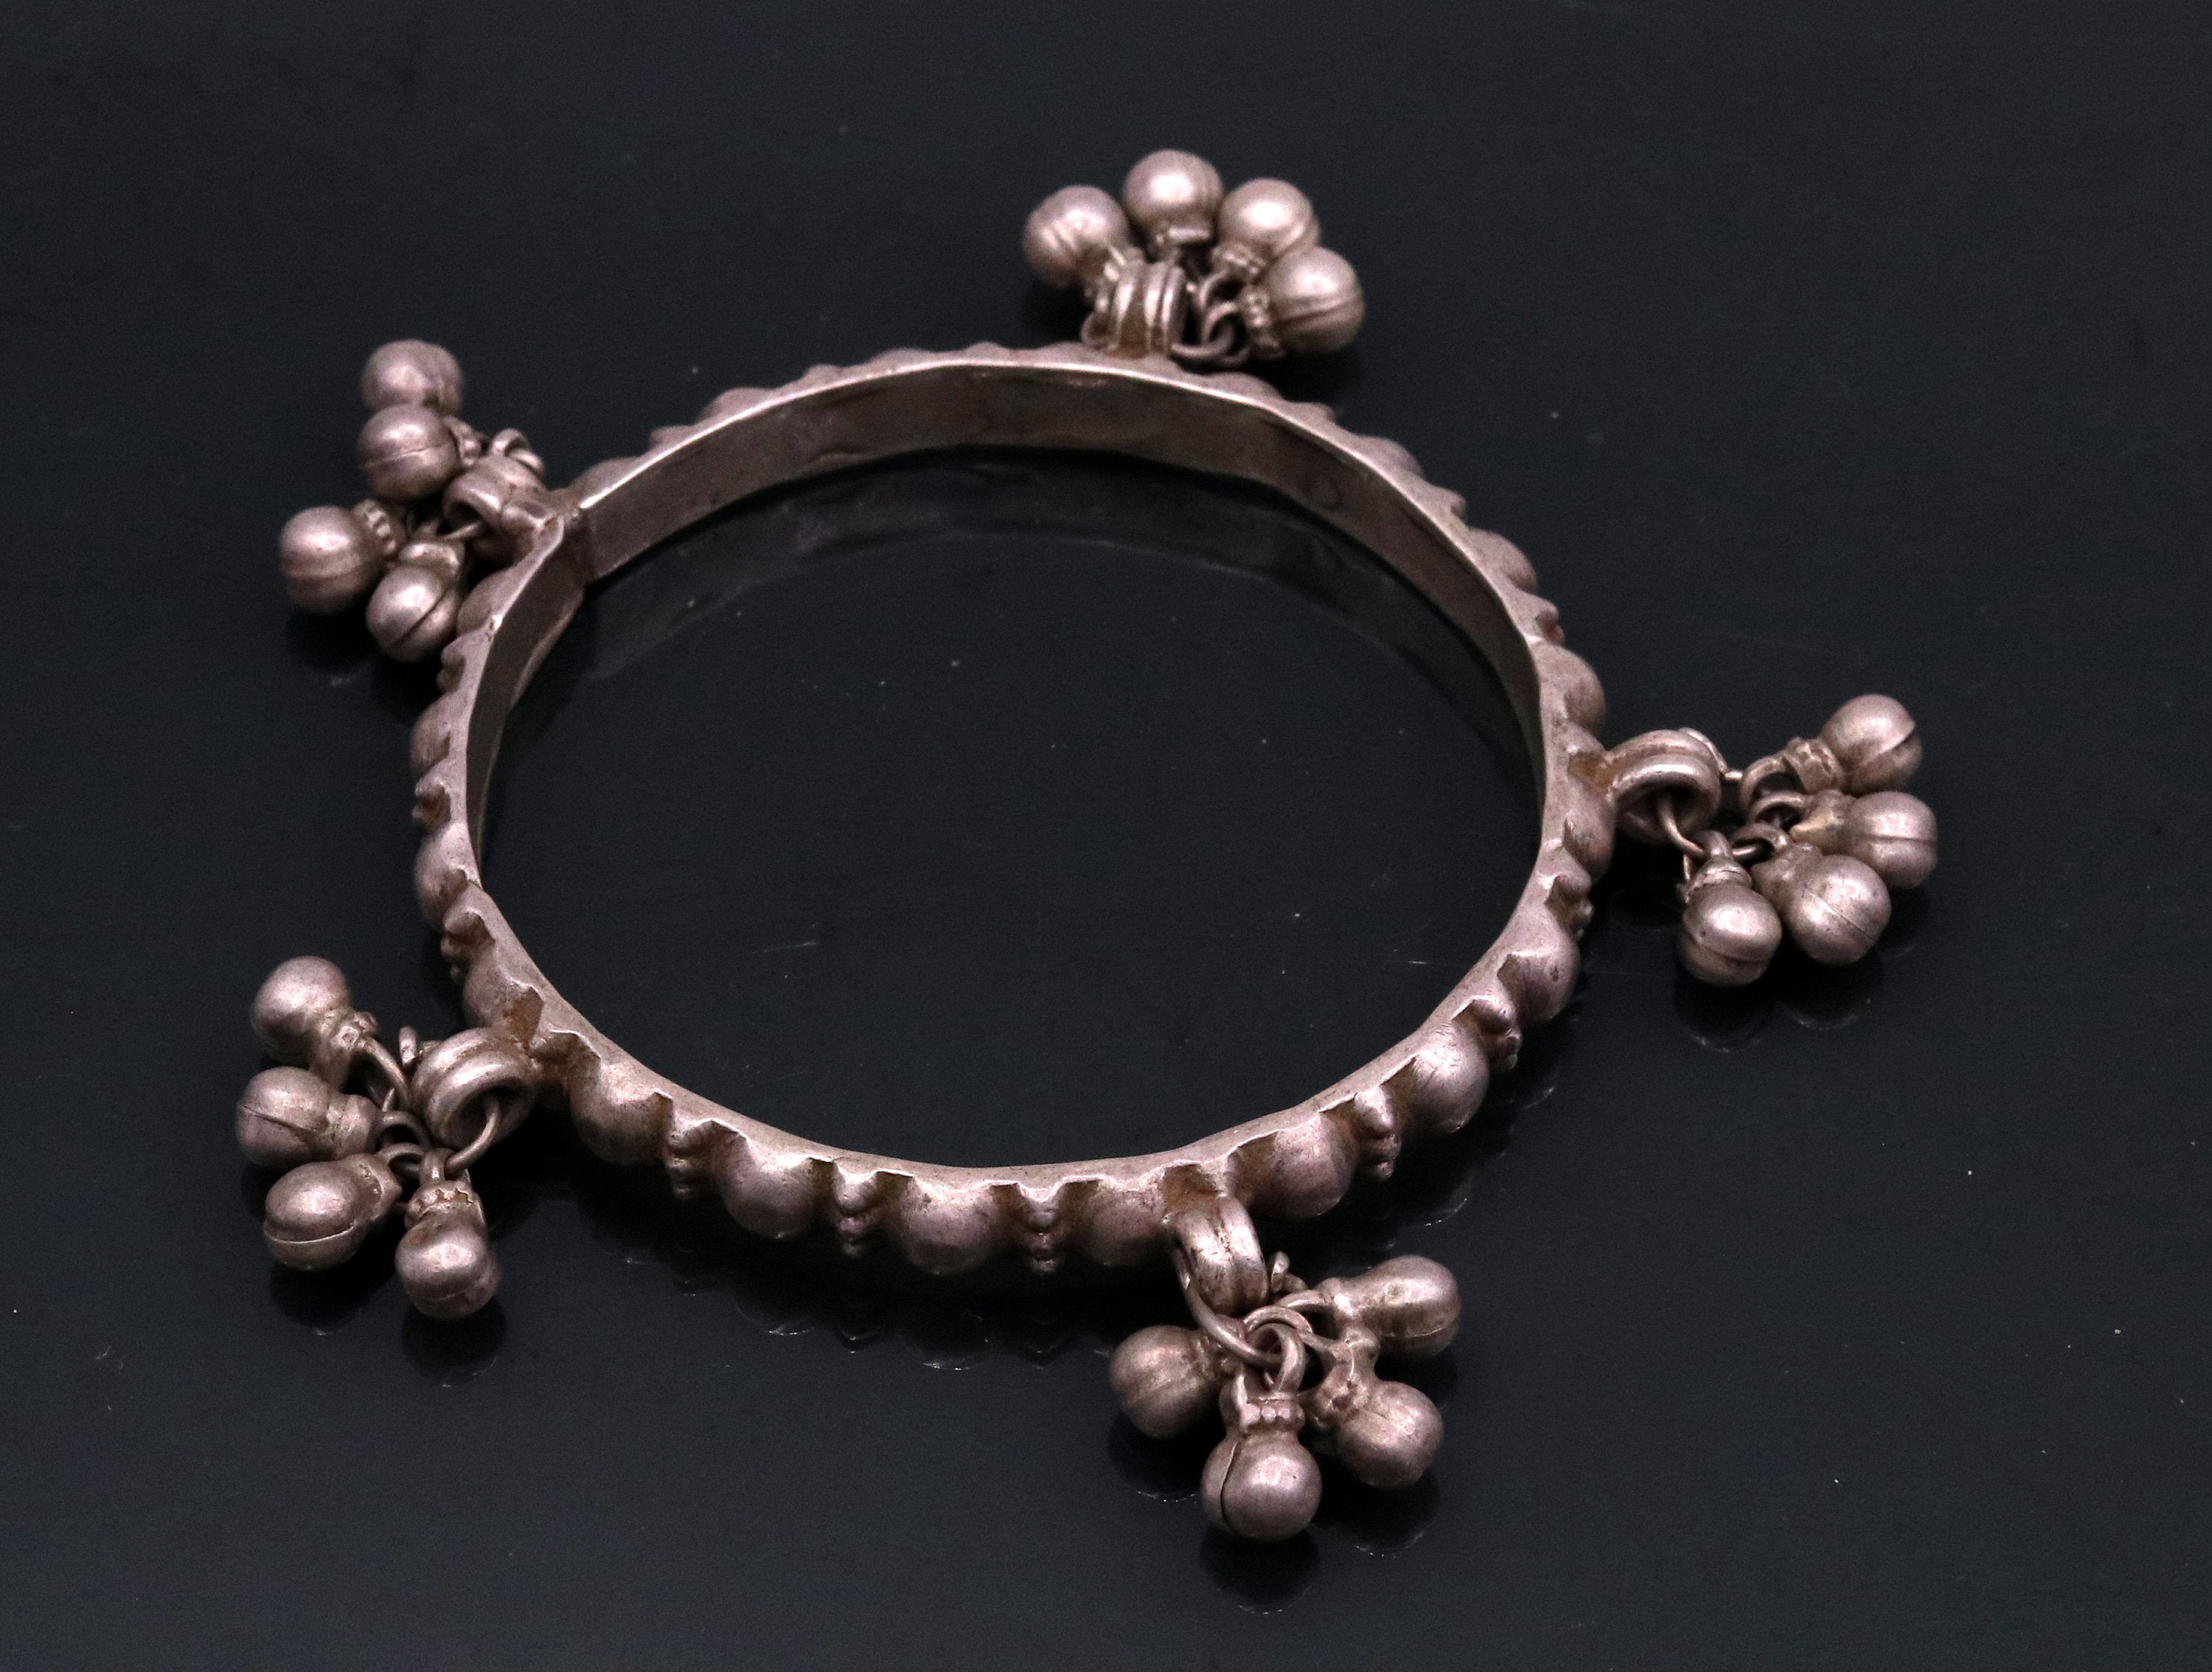 22K Gold Ruby & Emerald Bracelets for Women -Indian Gold Jewelry -Buy Online